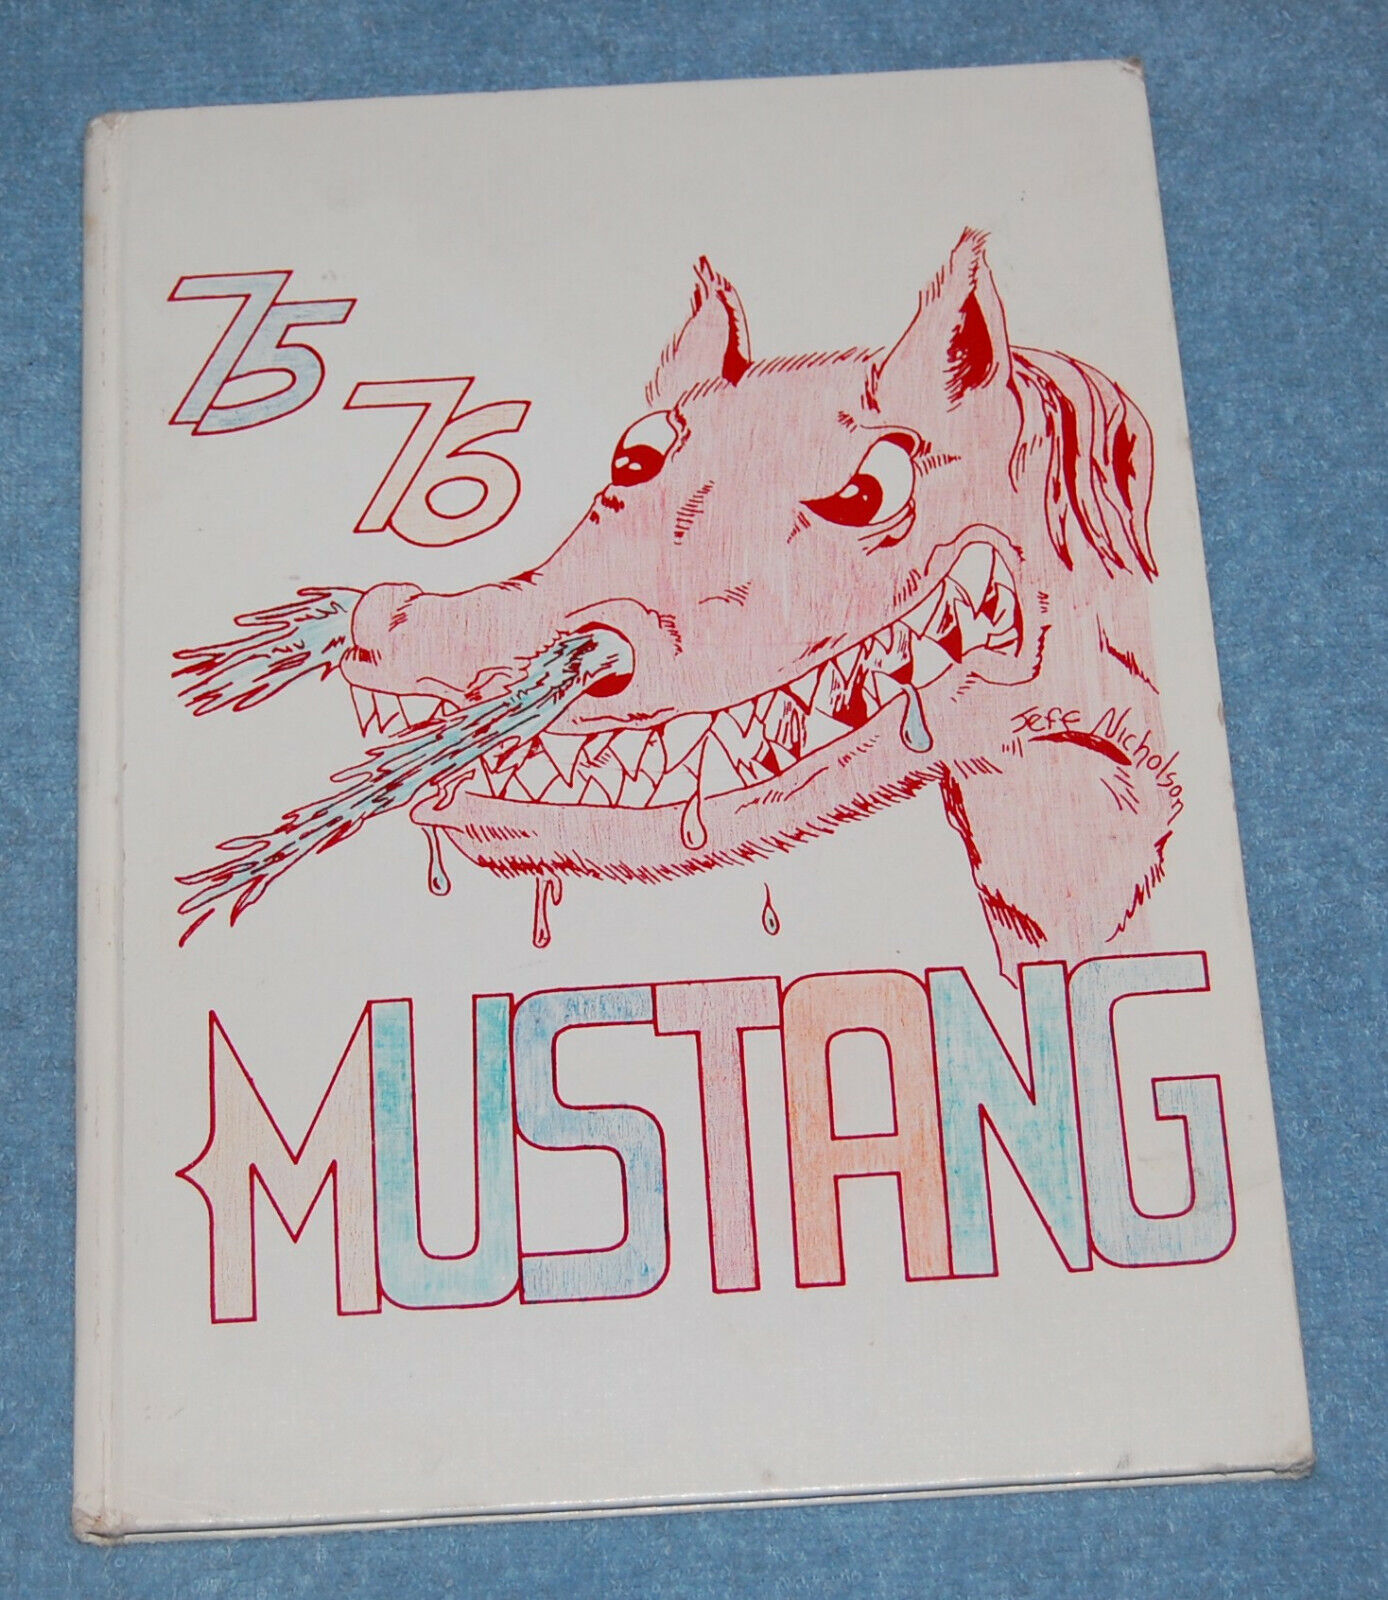 Pine Hollow Junior High School 1976 Yearbook (Mustang), Raleigh NC